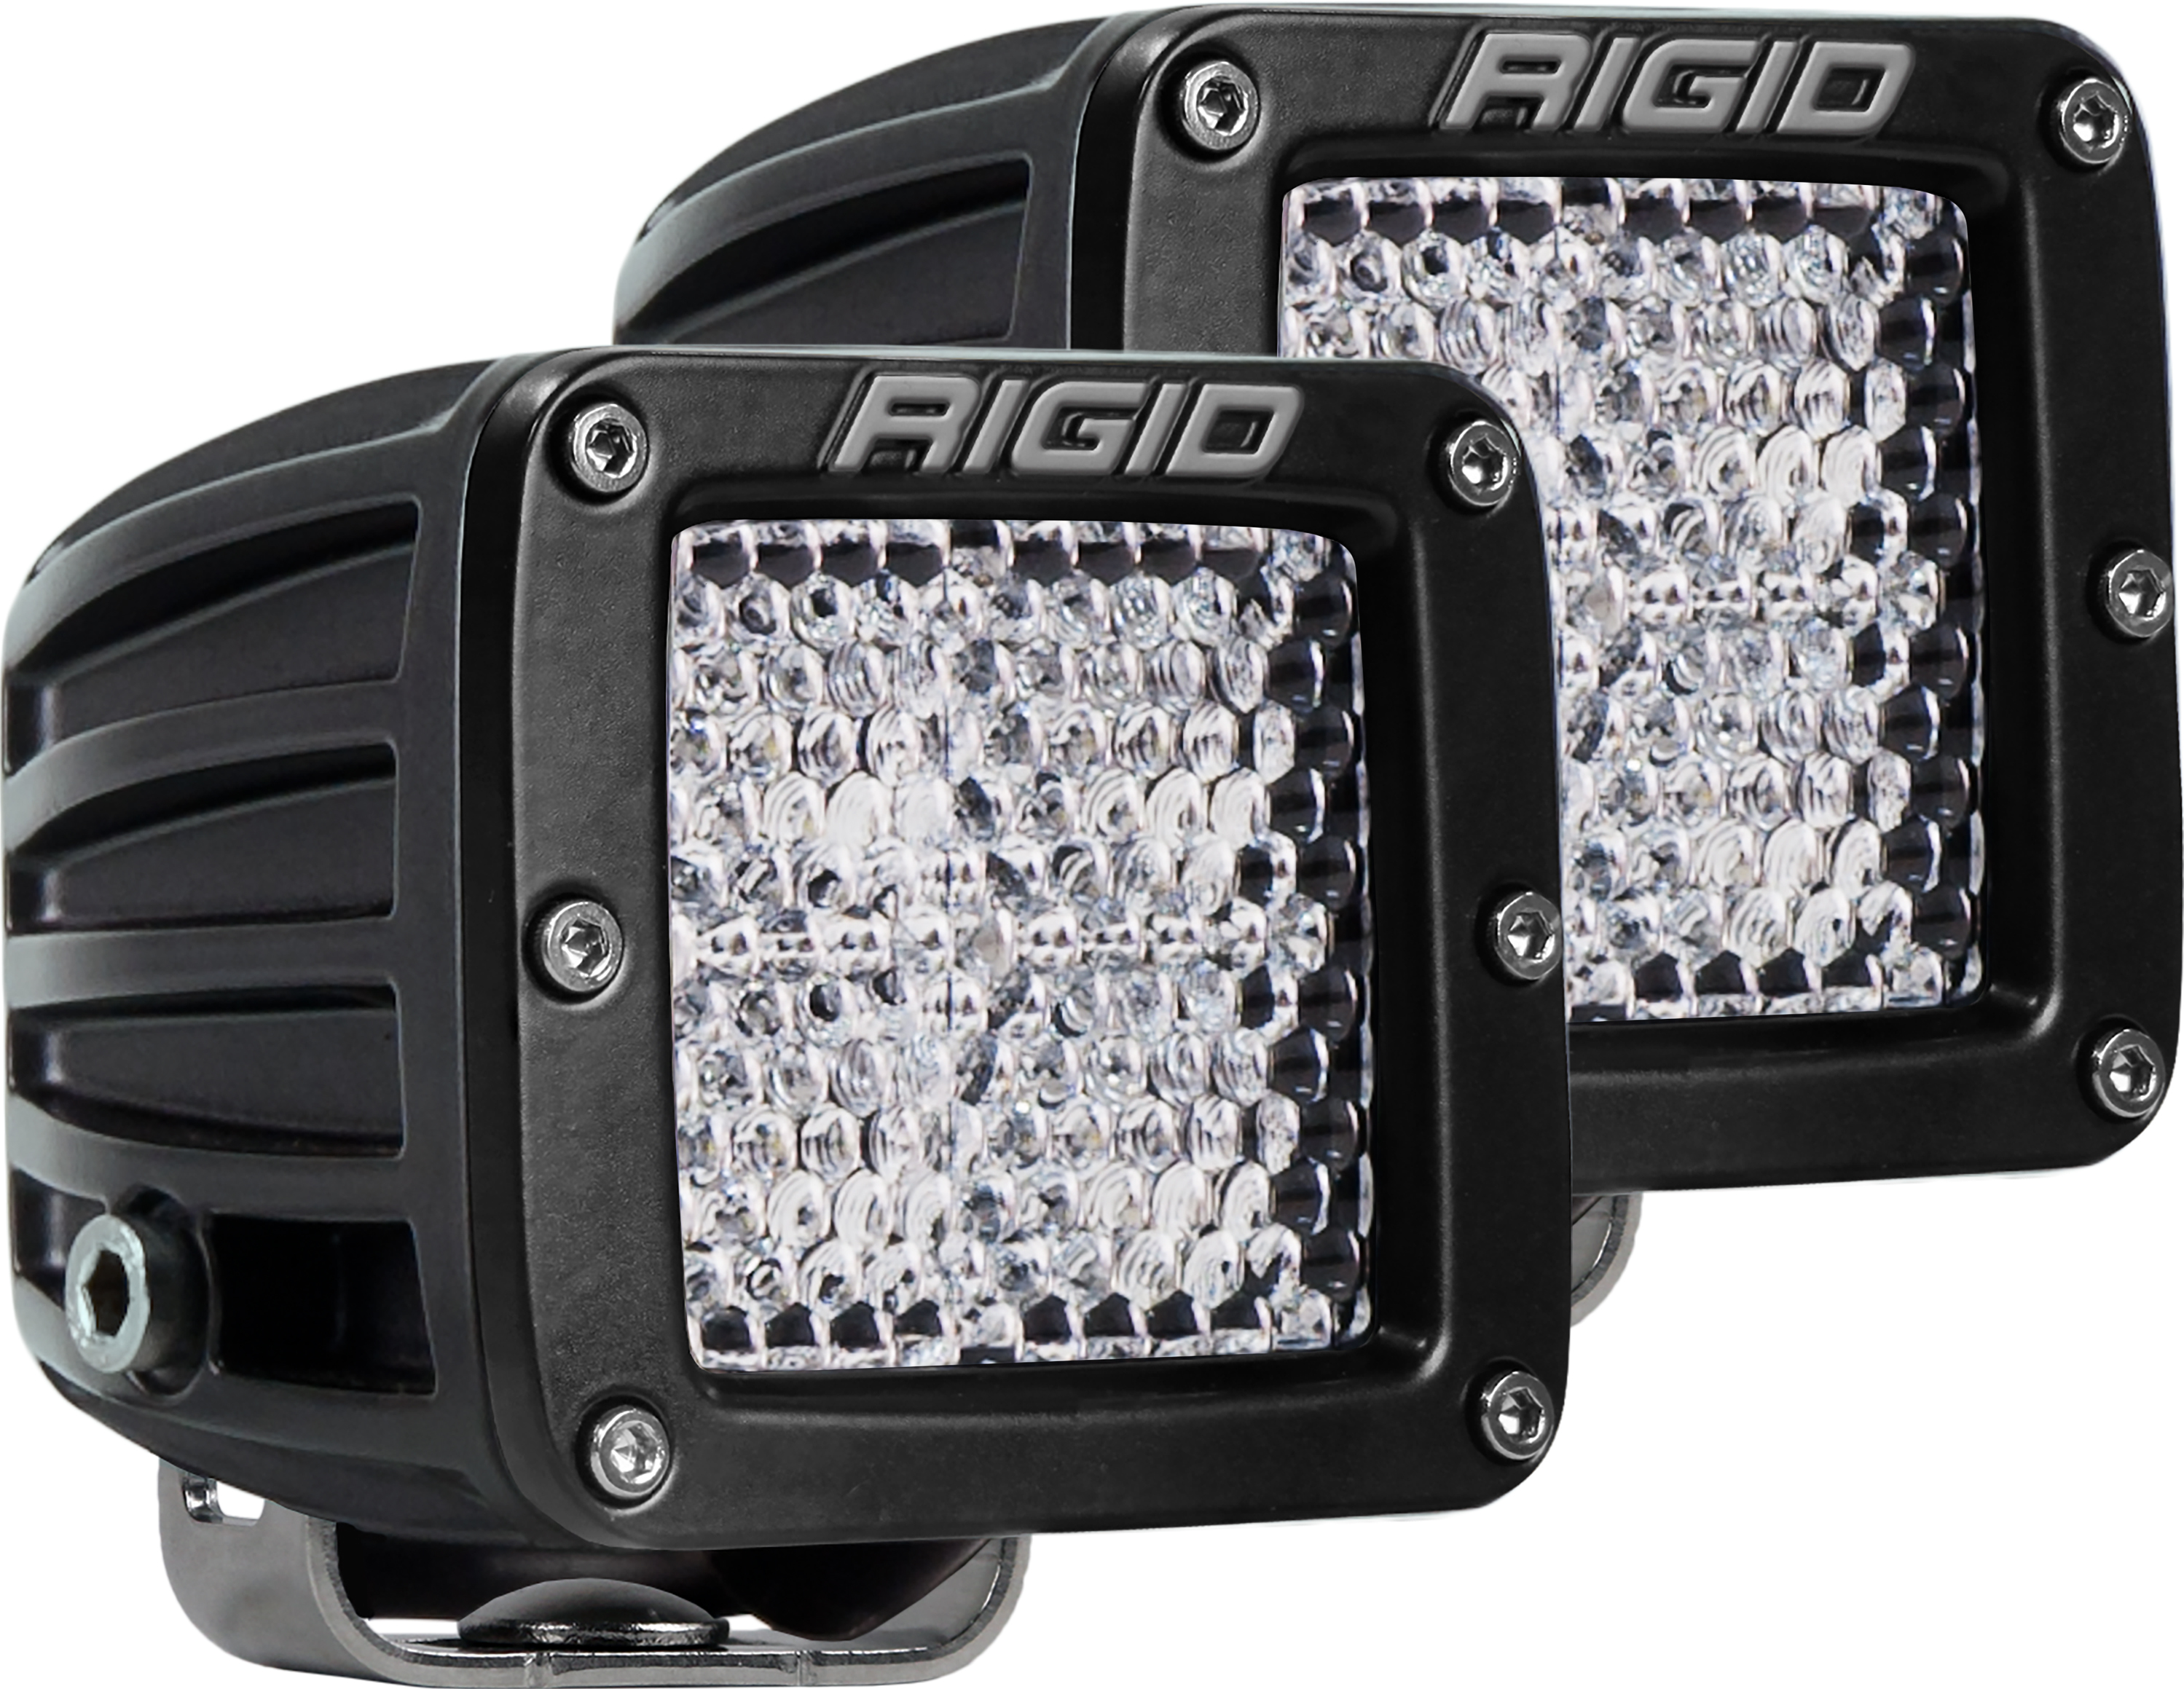 Rigid - D-series Pro Diffused Standard Mount Light Pair - 202513